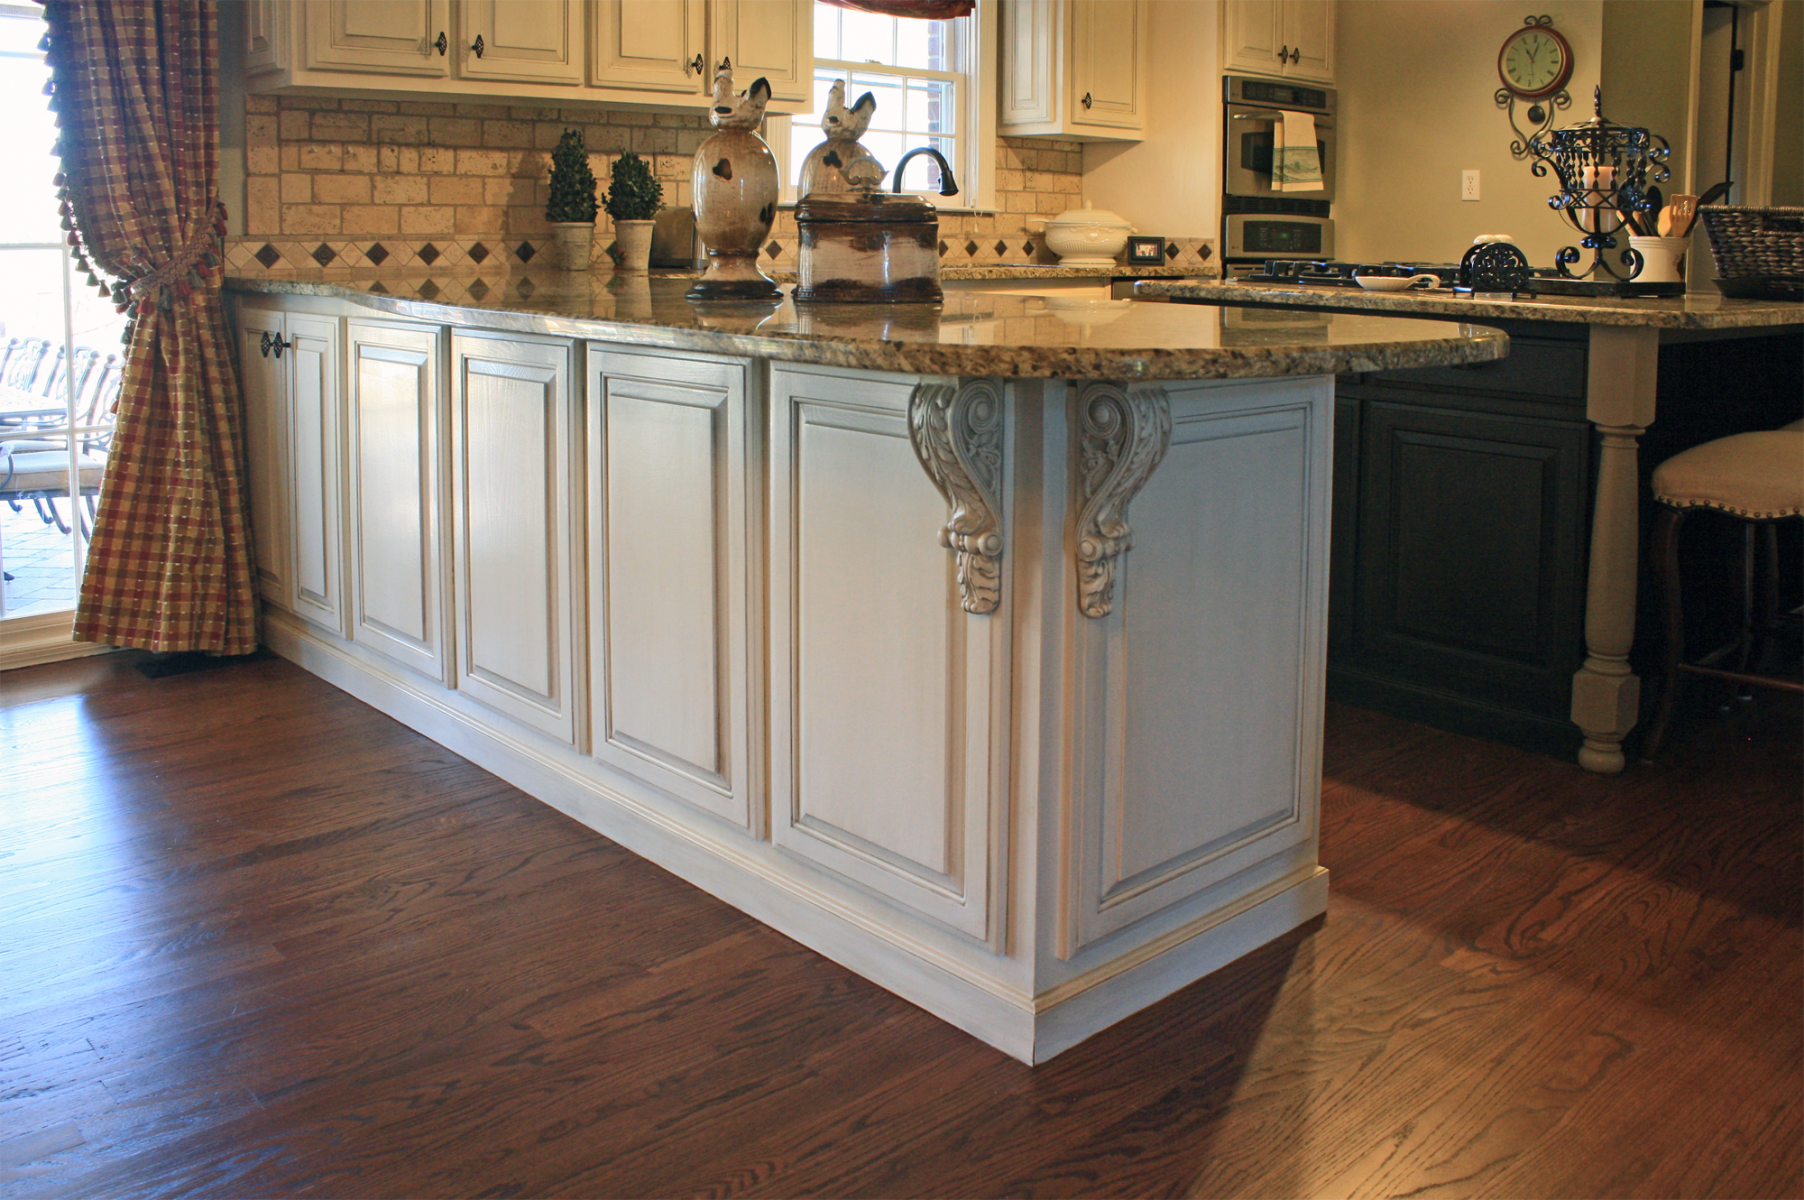 View this Mount Juliet customer’s kitchen cabinet transformation adding a warm modern Tuscan glaze look.